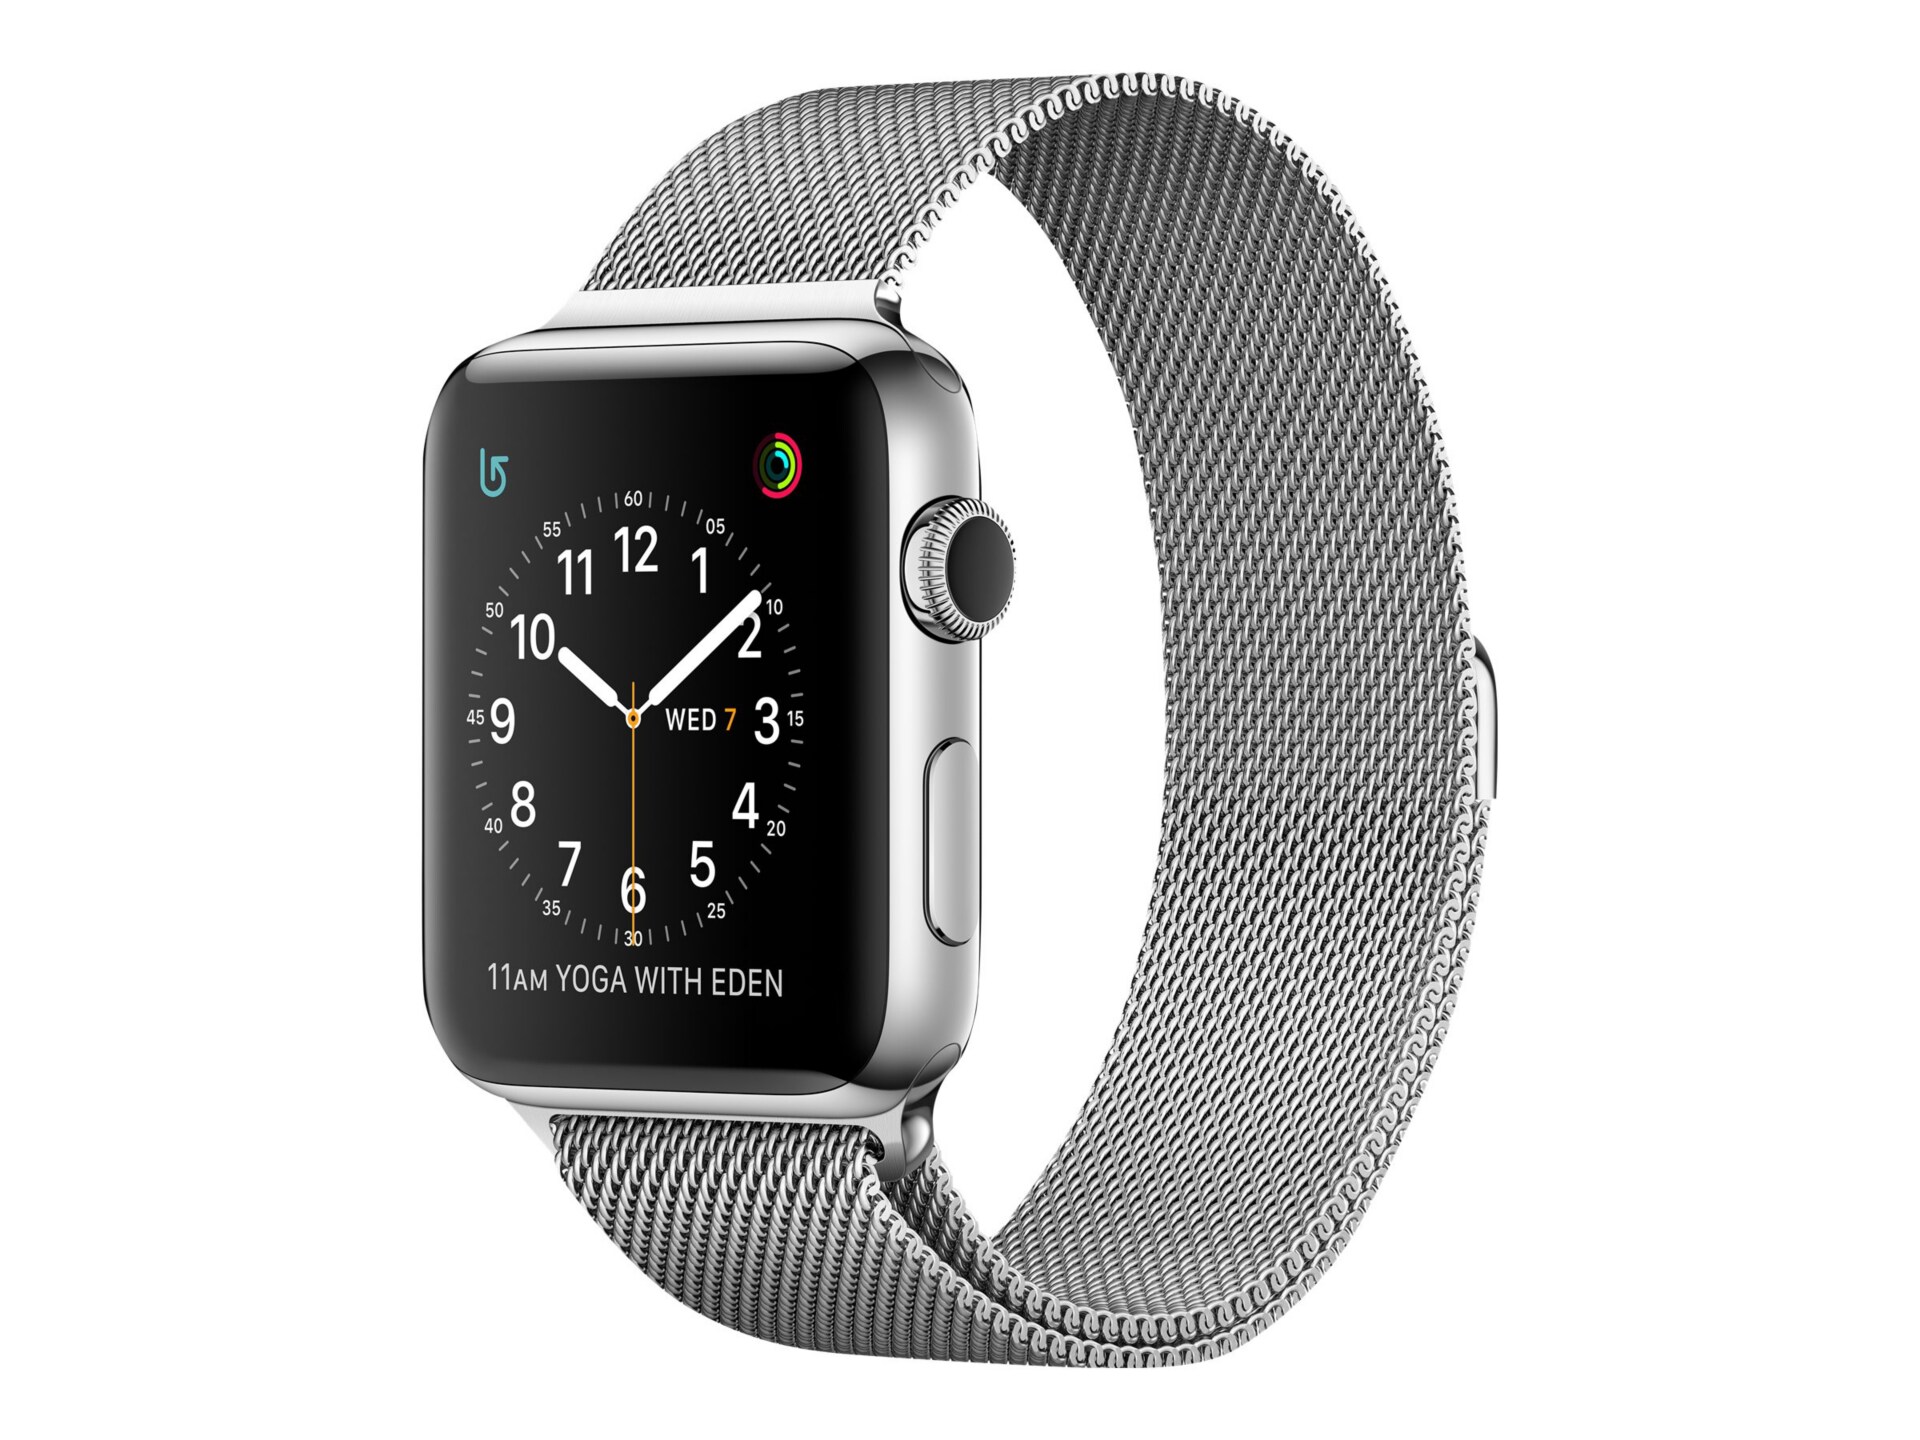 Apple Watch Series 2 - stainless steel - smart watch with milanese loop - silver